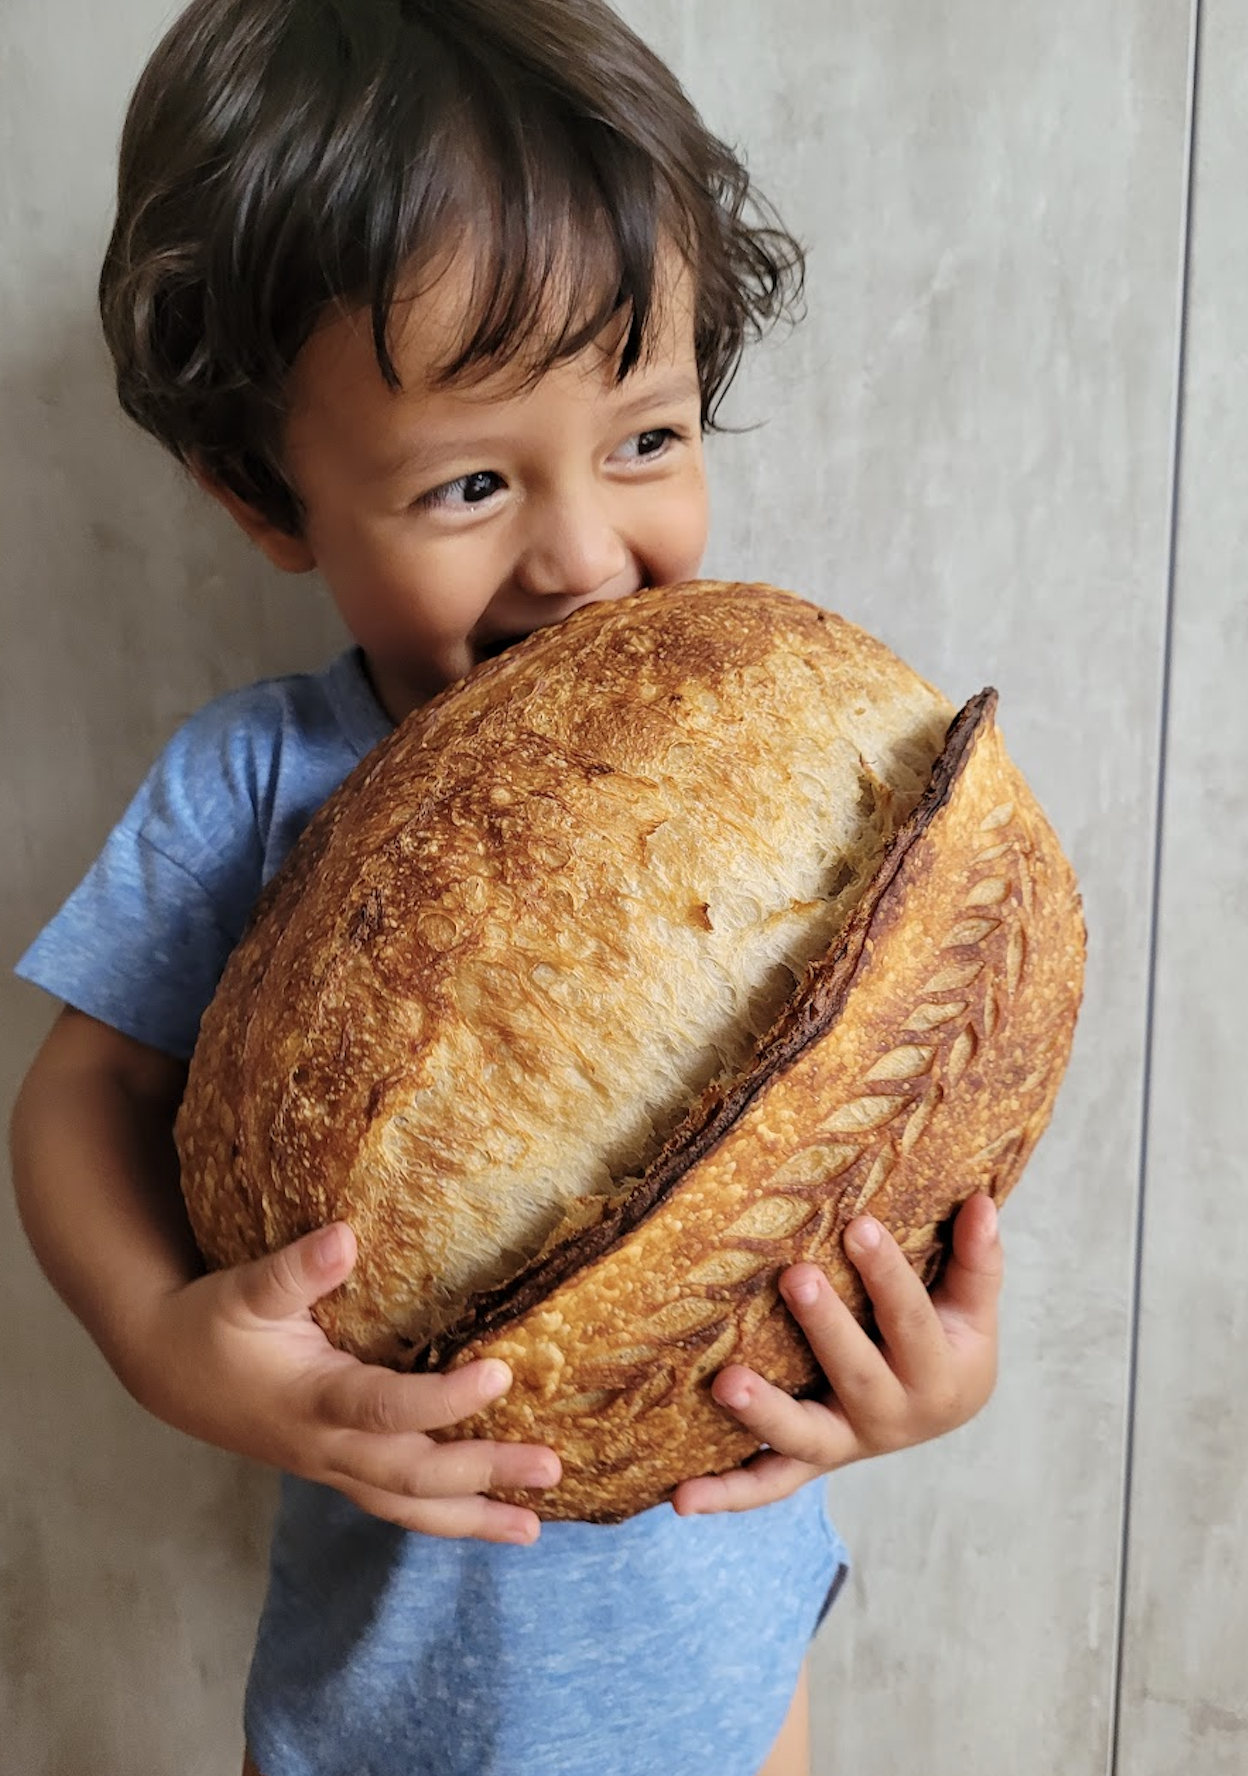 sourdough bread instagram social media influencer home baker content creator elvira @elleciously from singapore in asia 13